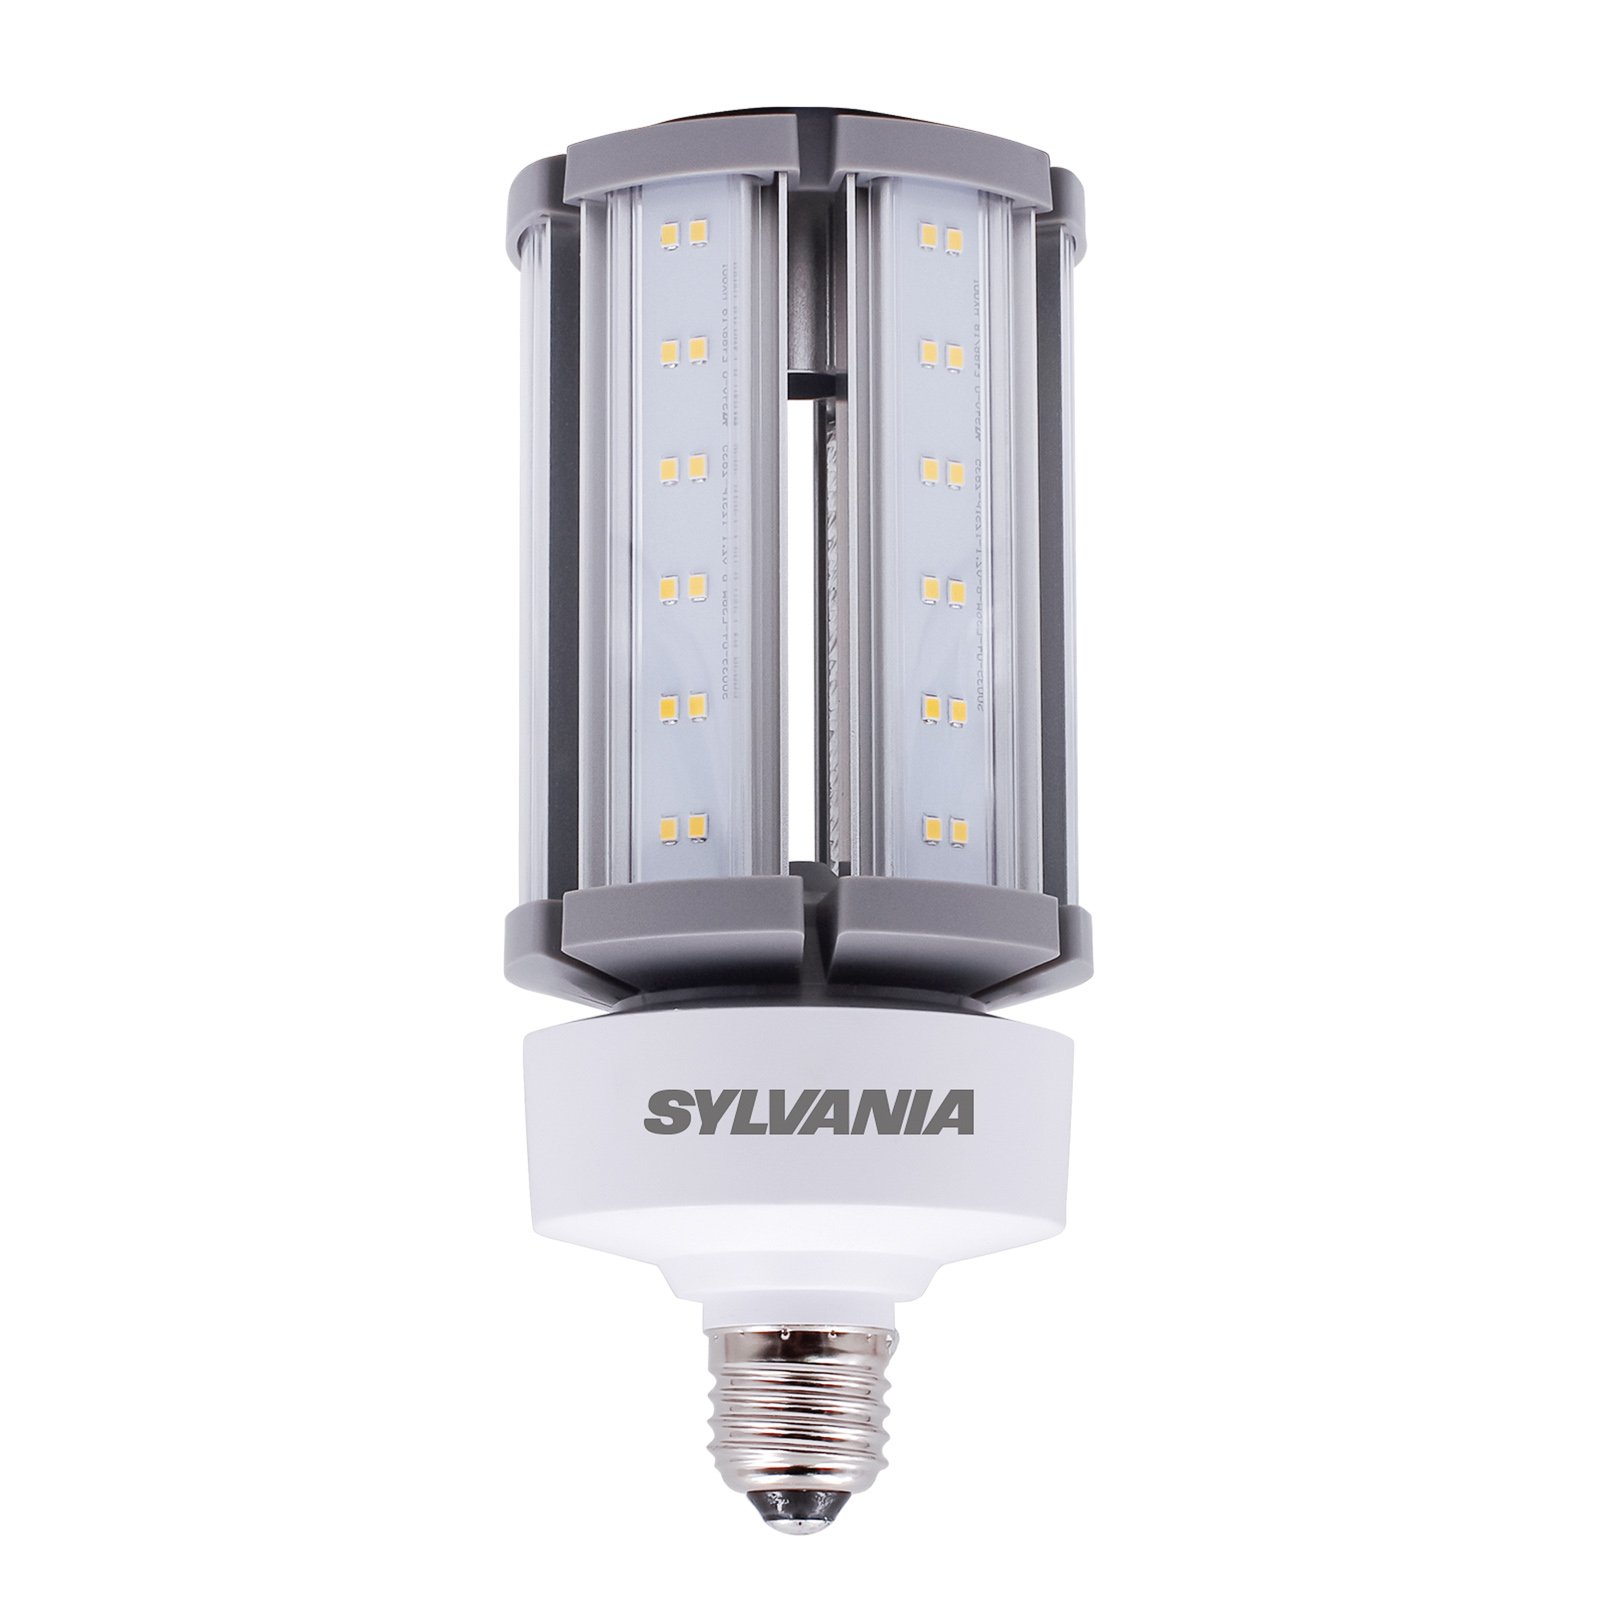 Sylvania LED bulb E27 36 W 4,000 K, 4,500 lm